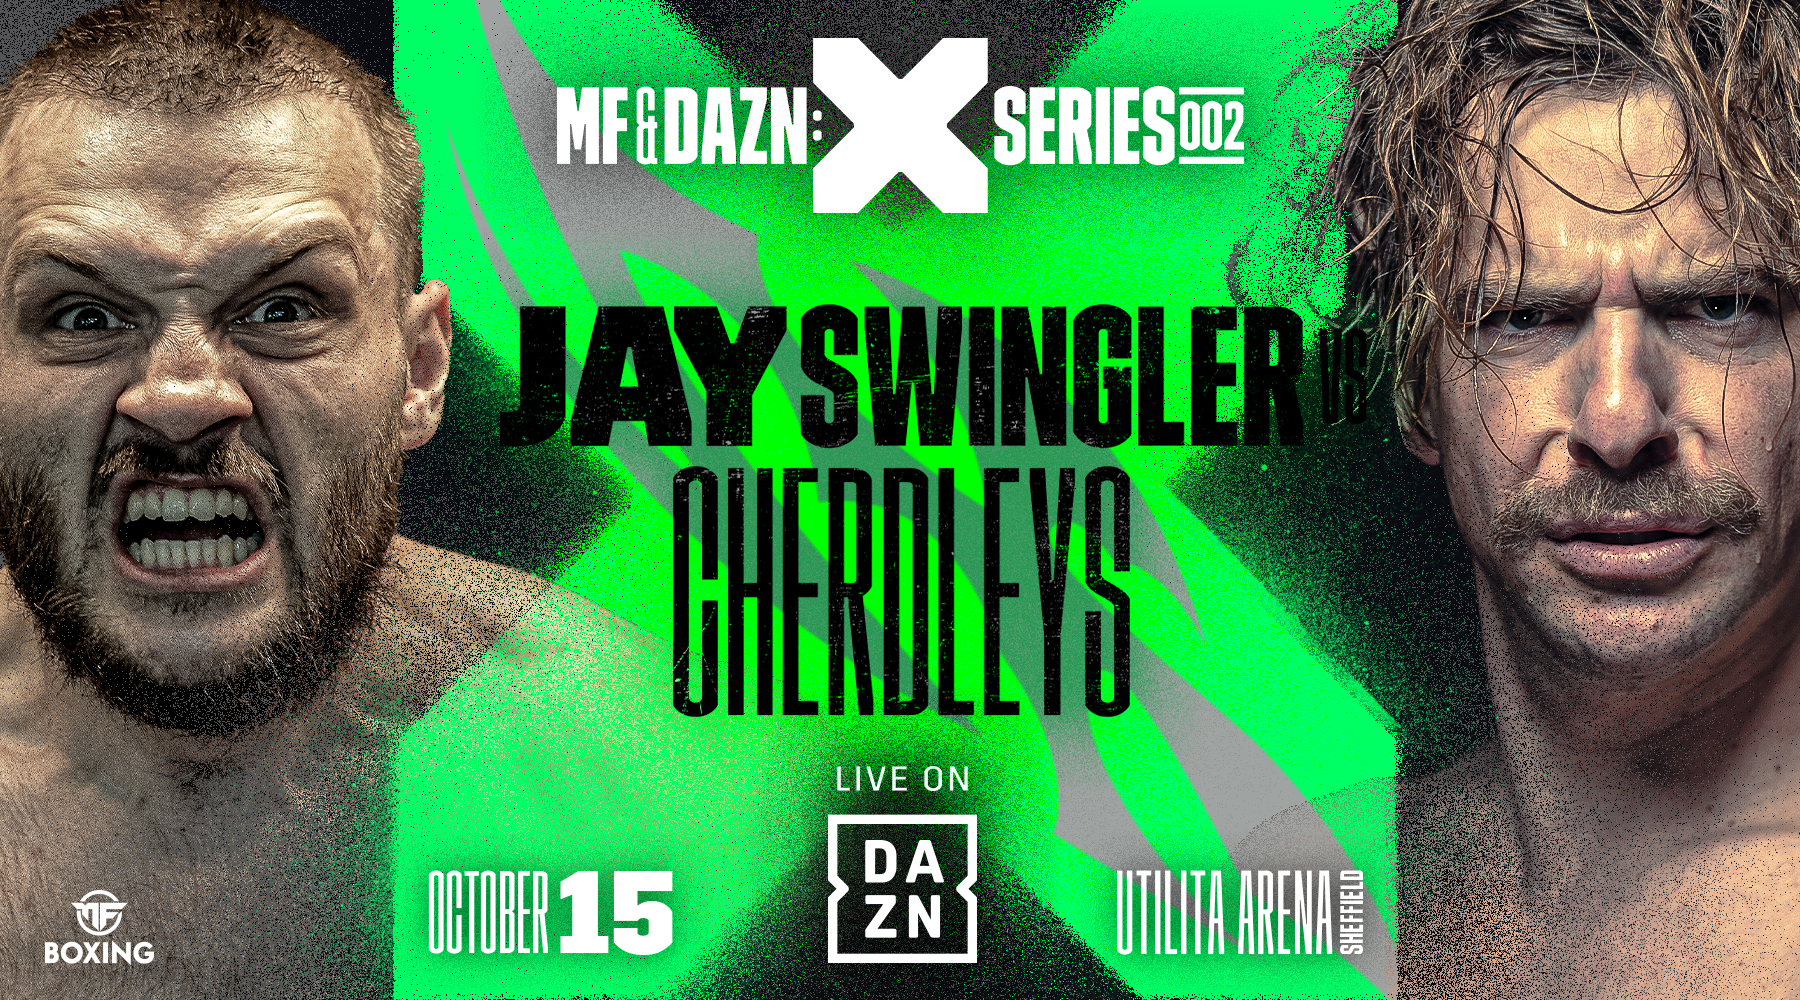 Jay Swingler vs Cherdleys Live Stream How to watch